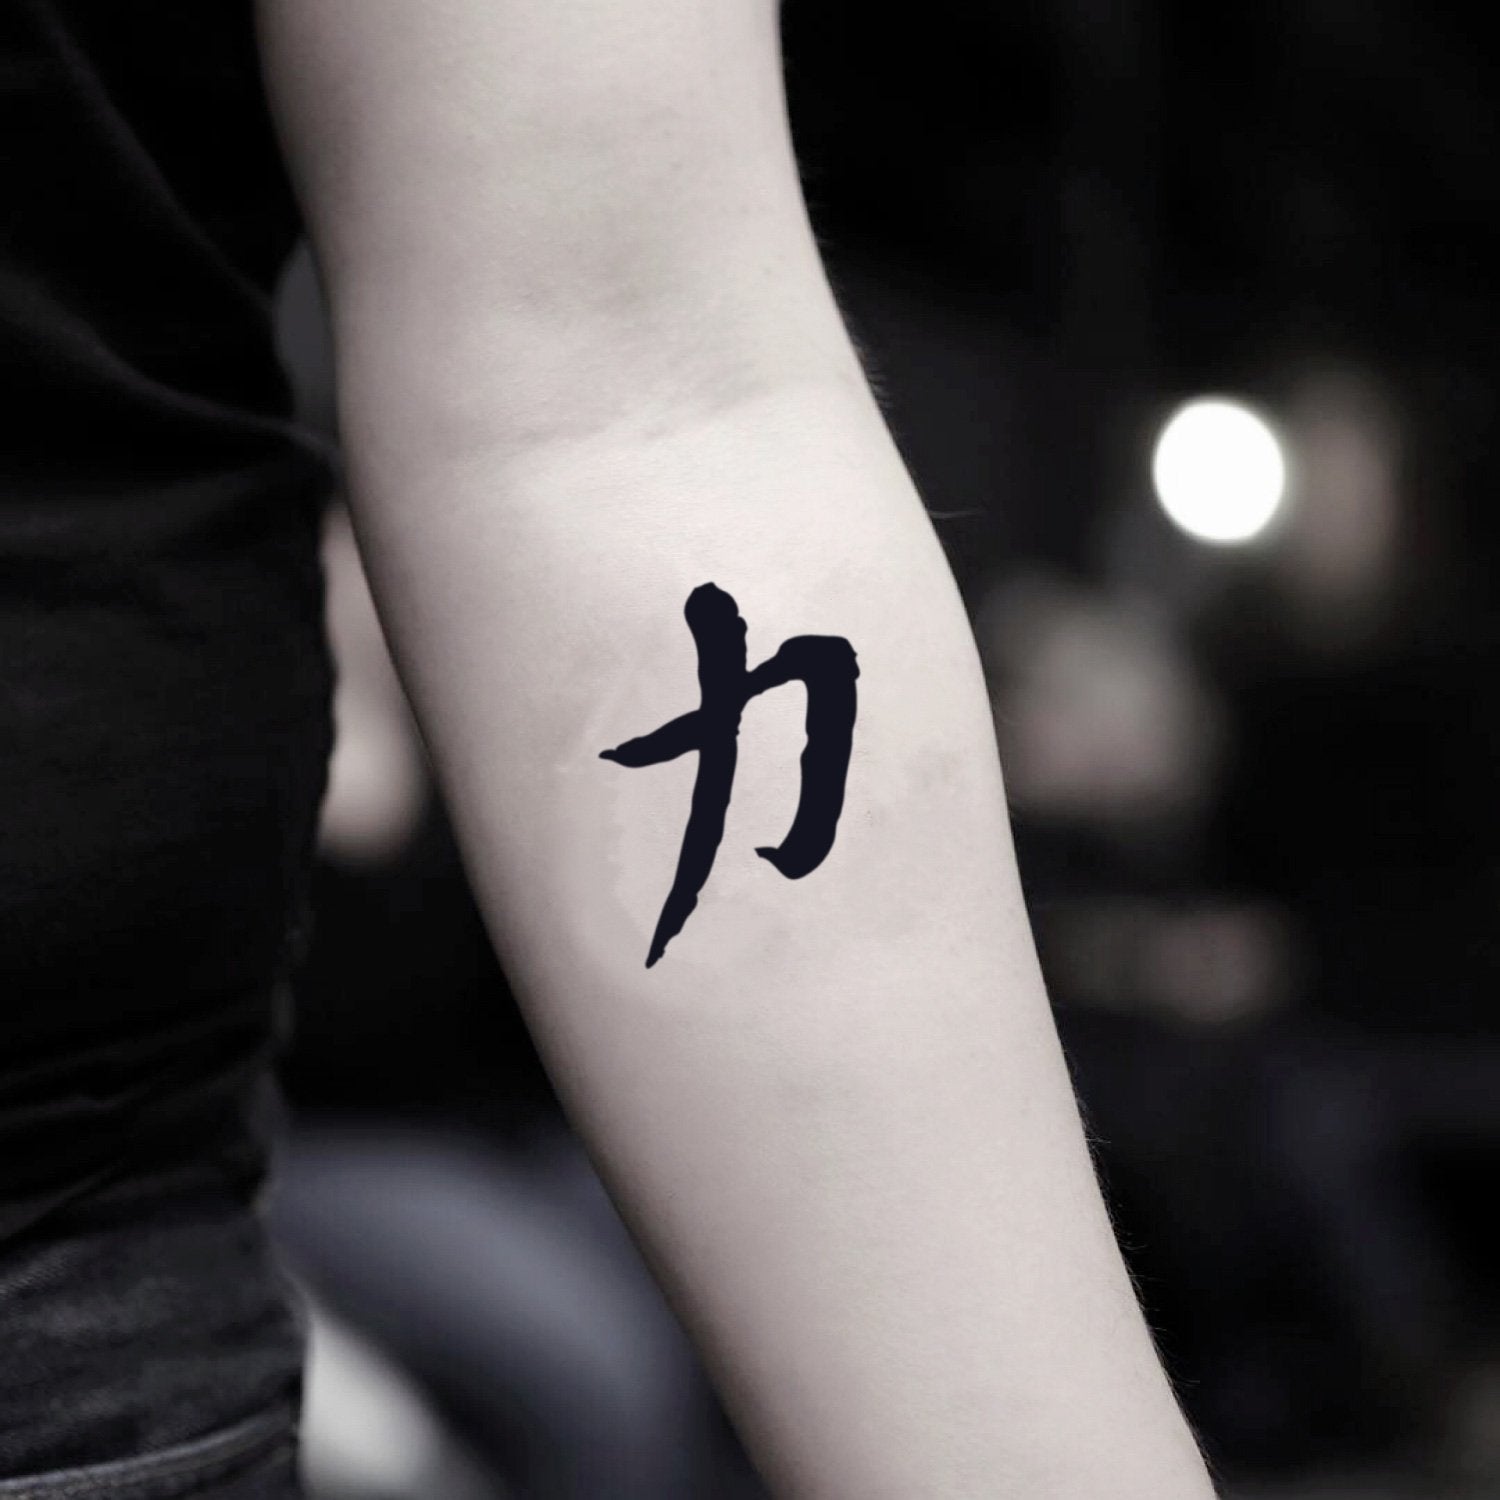 inner strength symbol tattoo